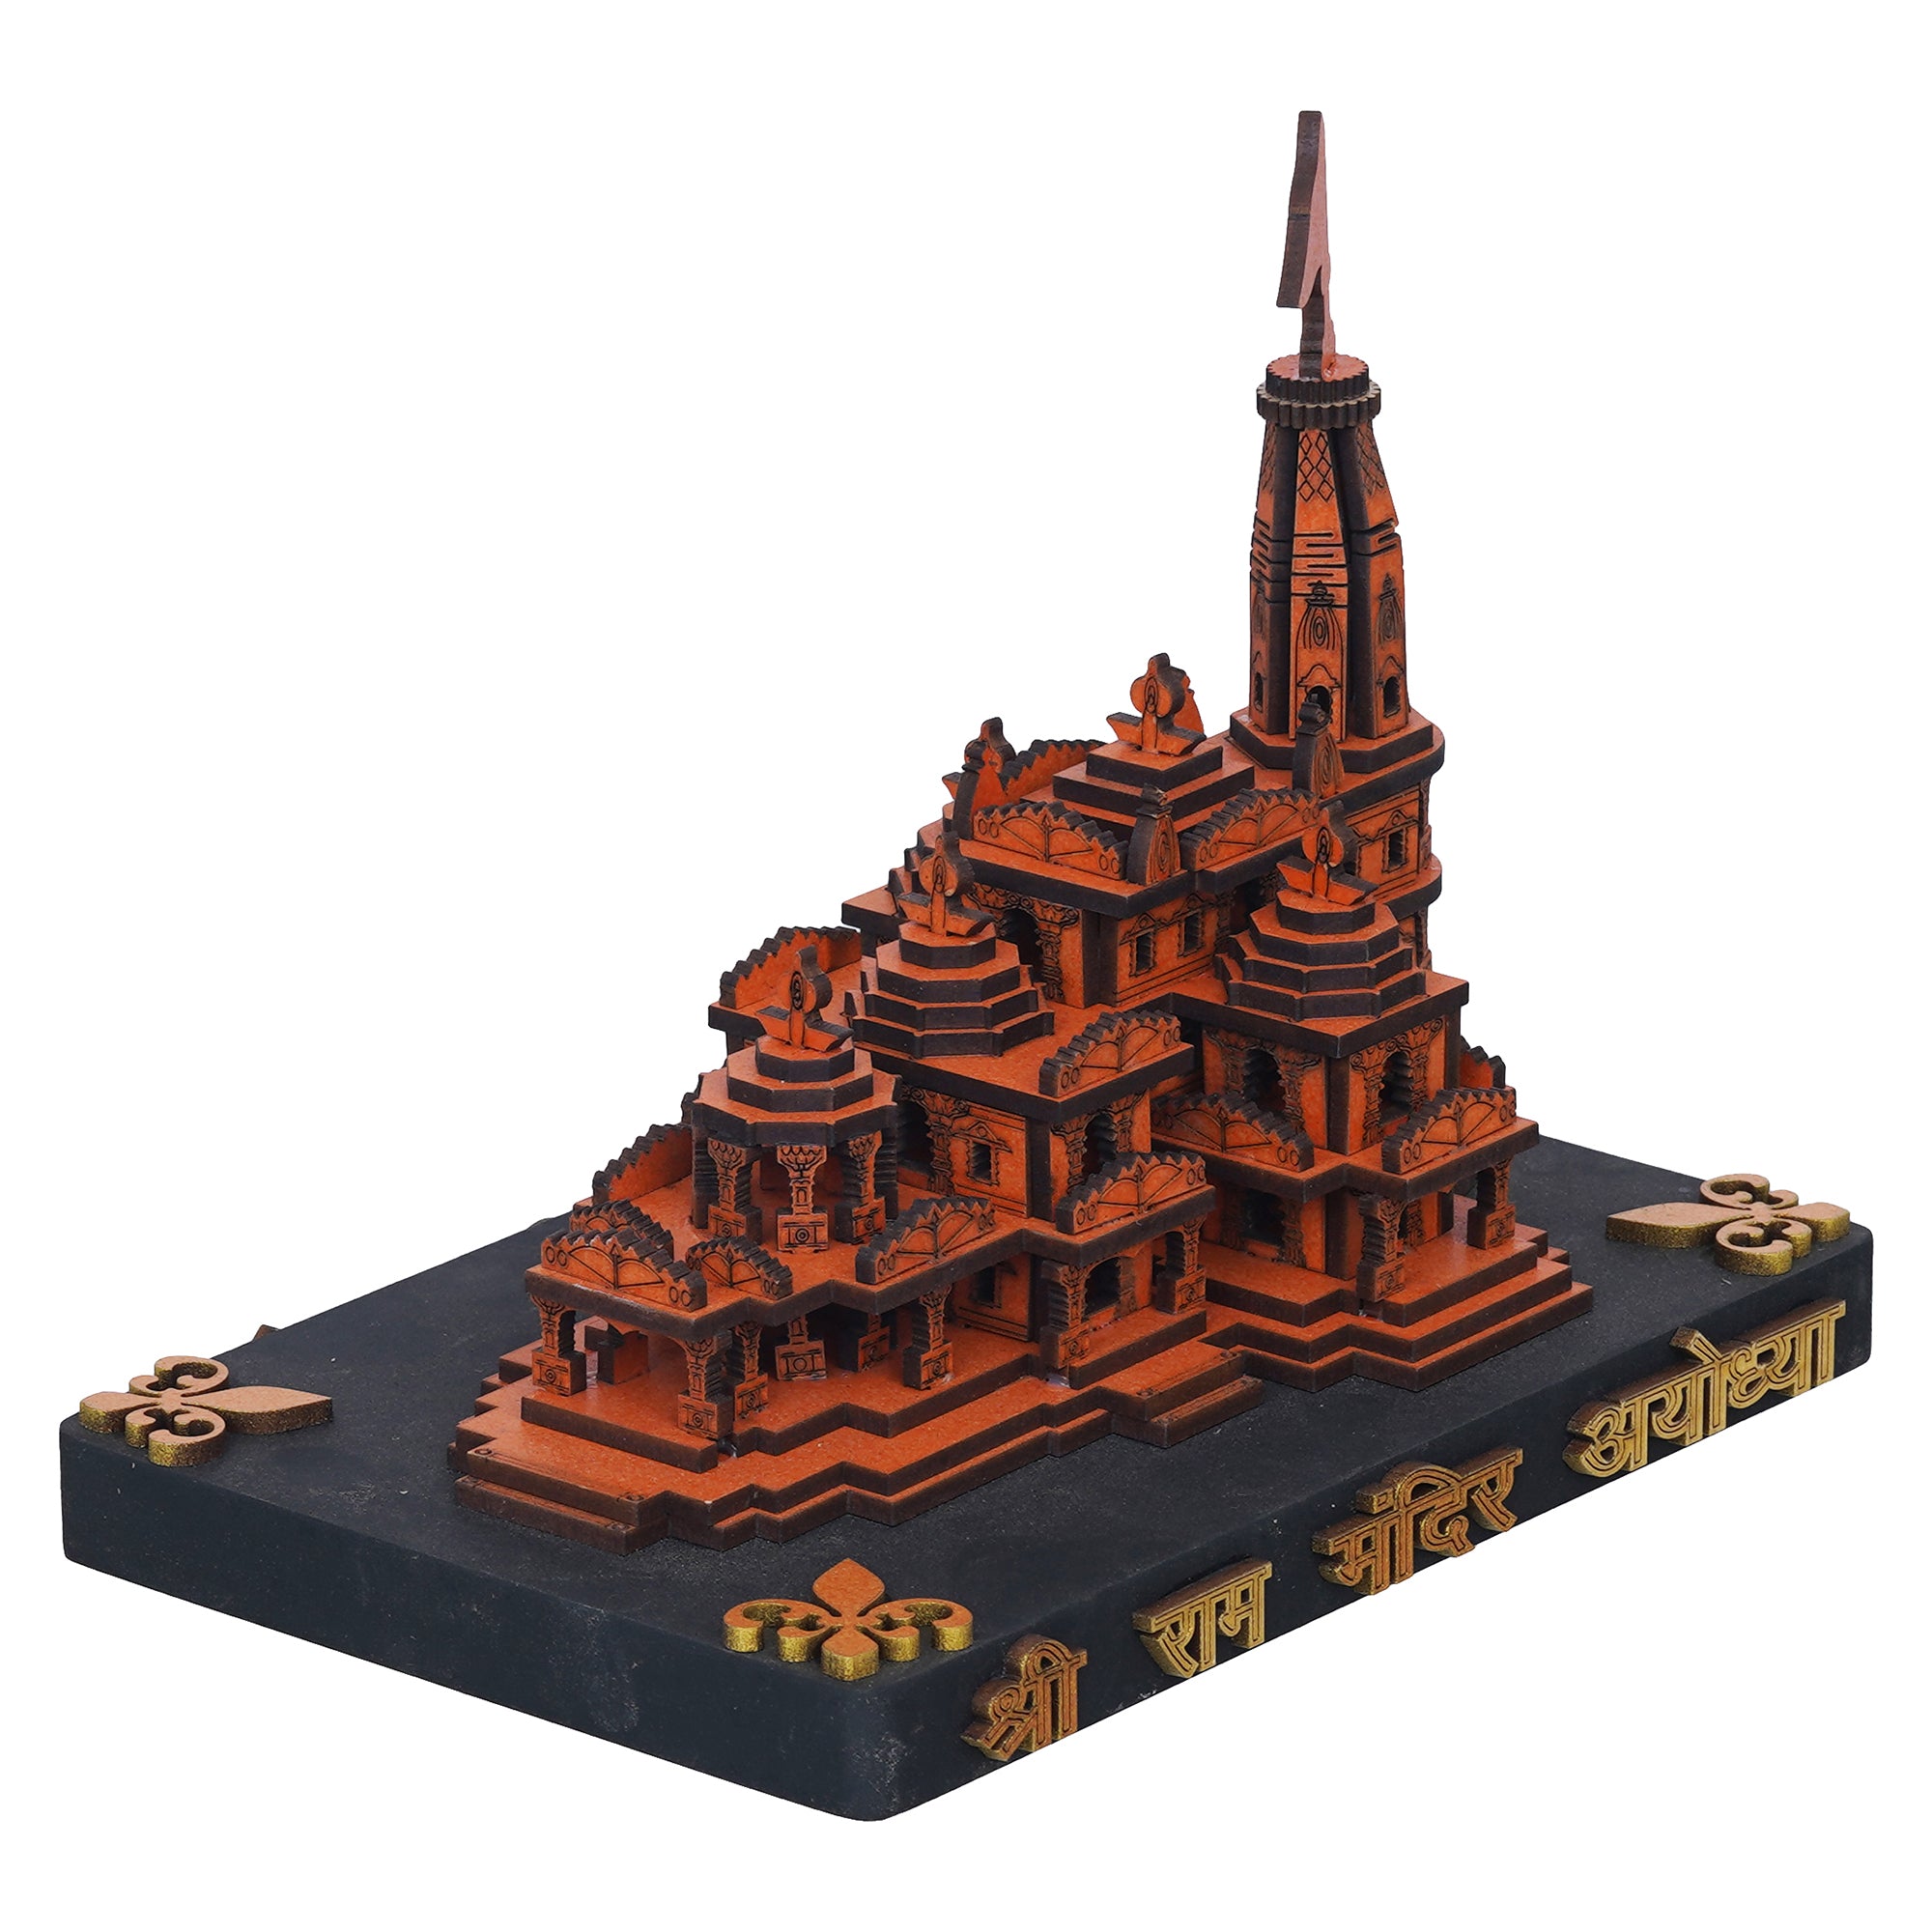 eCraftIndia Shri Ram Mandir Ayodhya Model - Wooden MDF Craftsmanship Authentic Designer Temple - Ideal for Home Temple, Decor, and Spiritual Gifting (Orange, Gold) 6